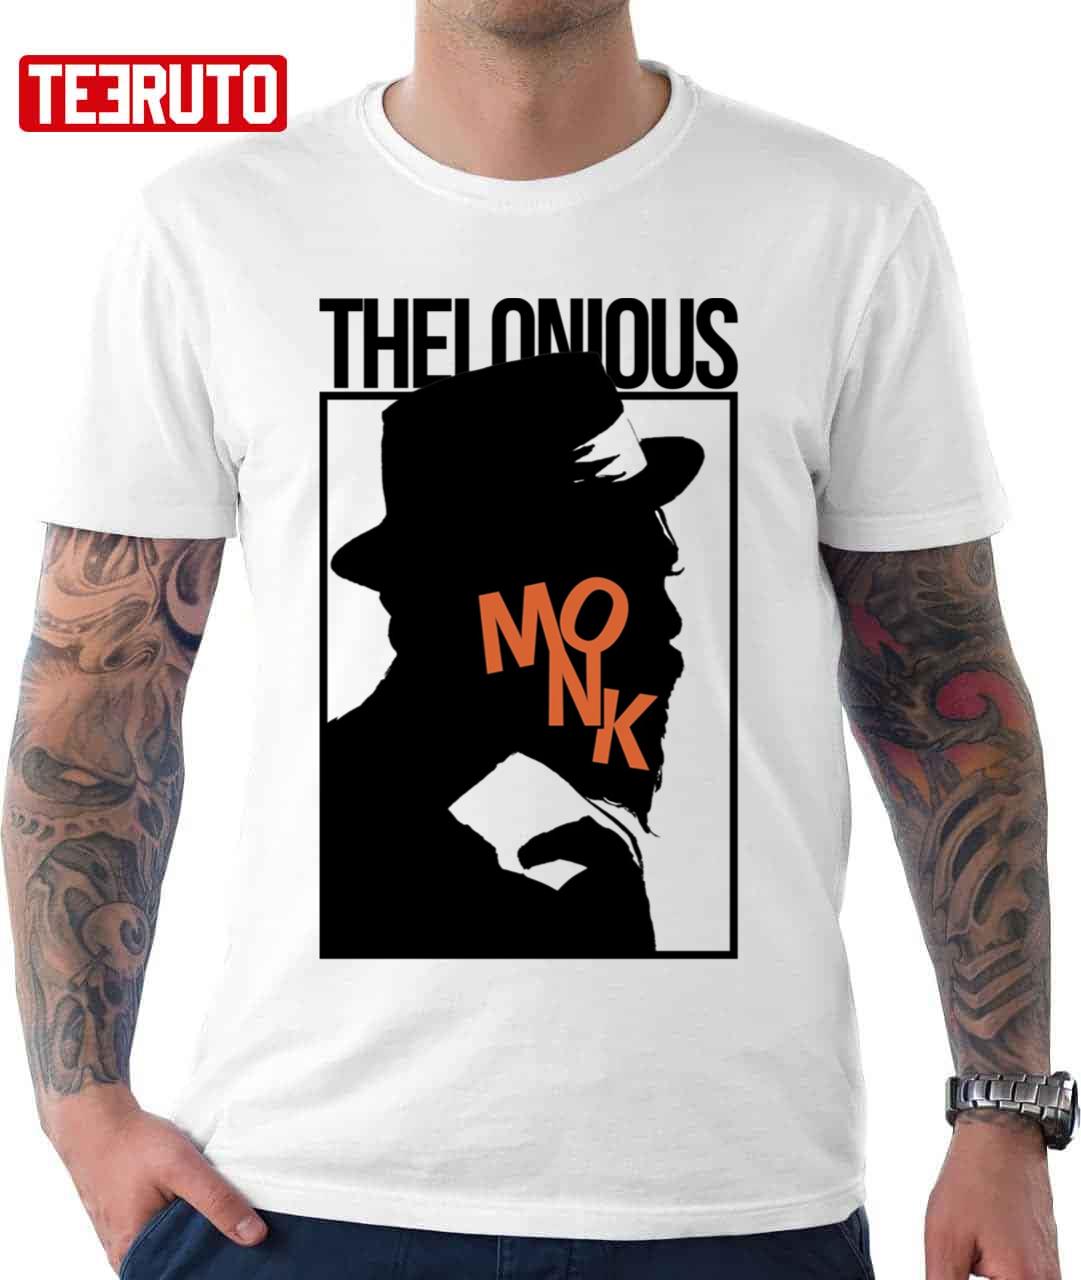 Cool Black Design Of Thelonious Monk 90s Unisex T-Shirt